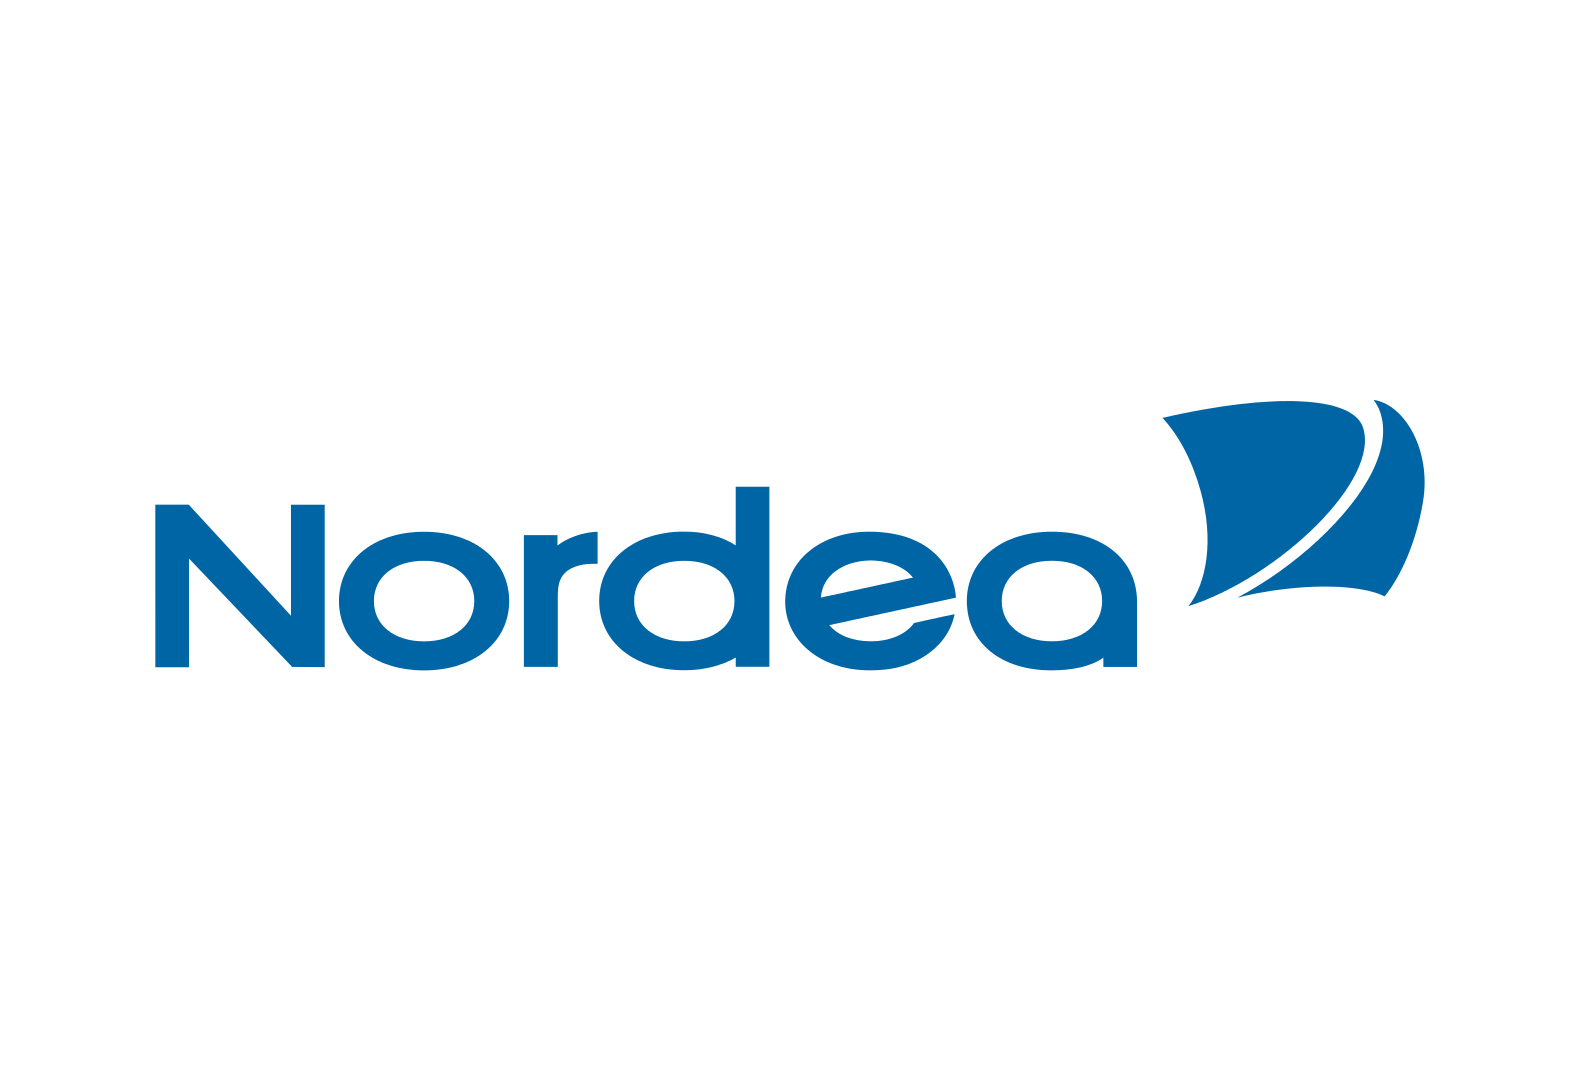 Business News in Brief: Nordea lets 6,000 go in massive streamlining effort